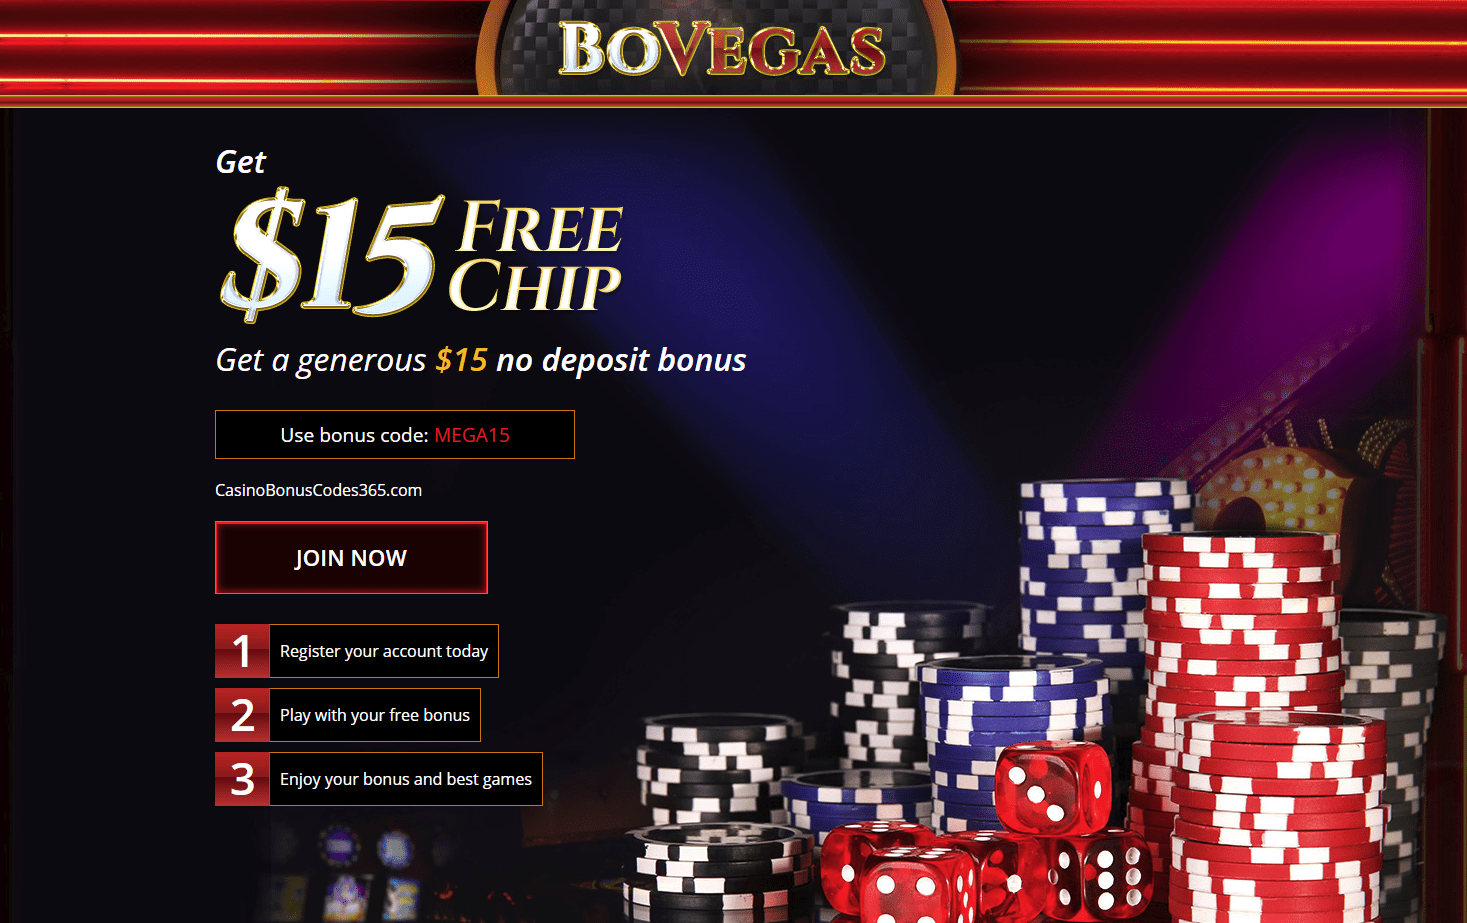 Bovegas casino reviews